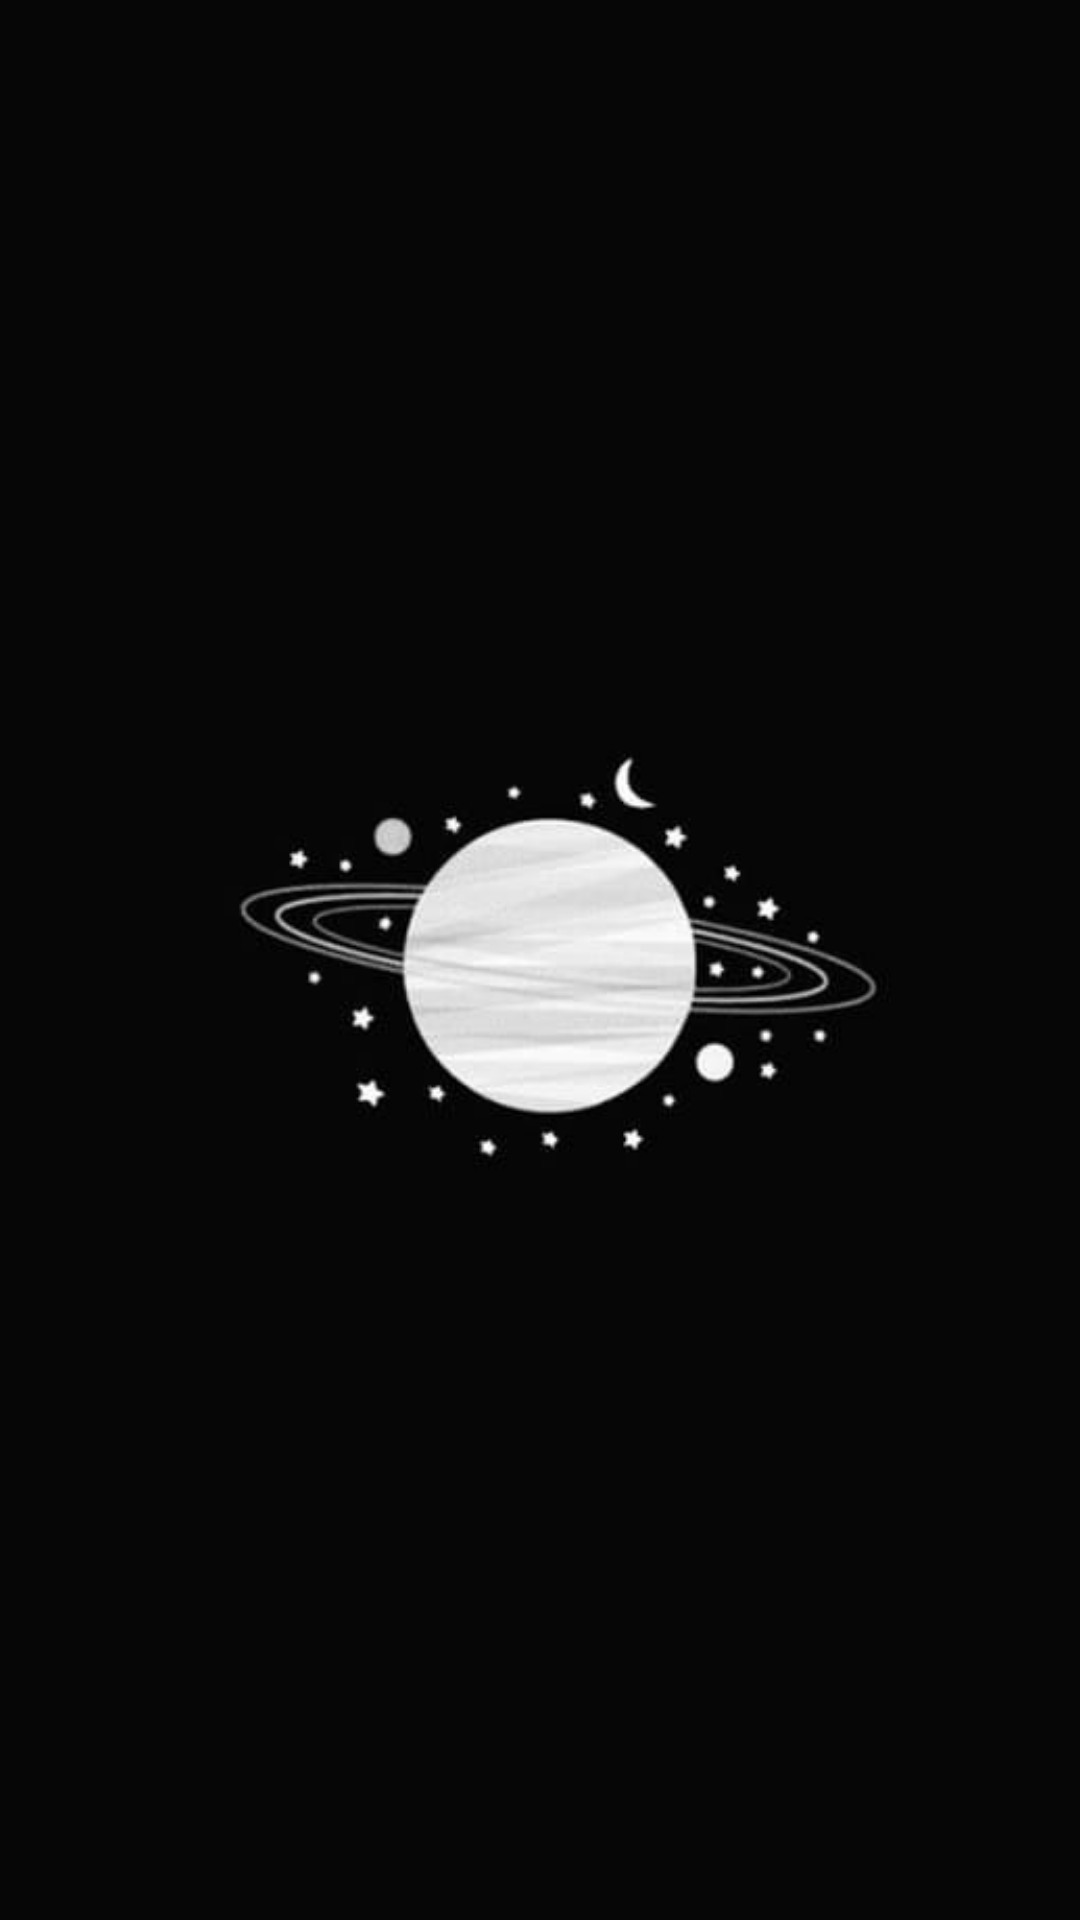 A black and white wallpaper of a planet - Black, pretty